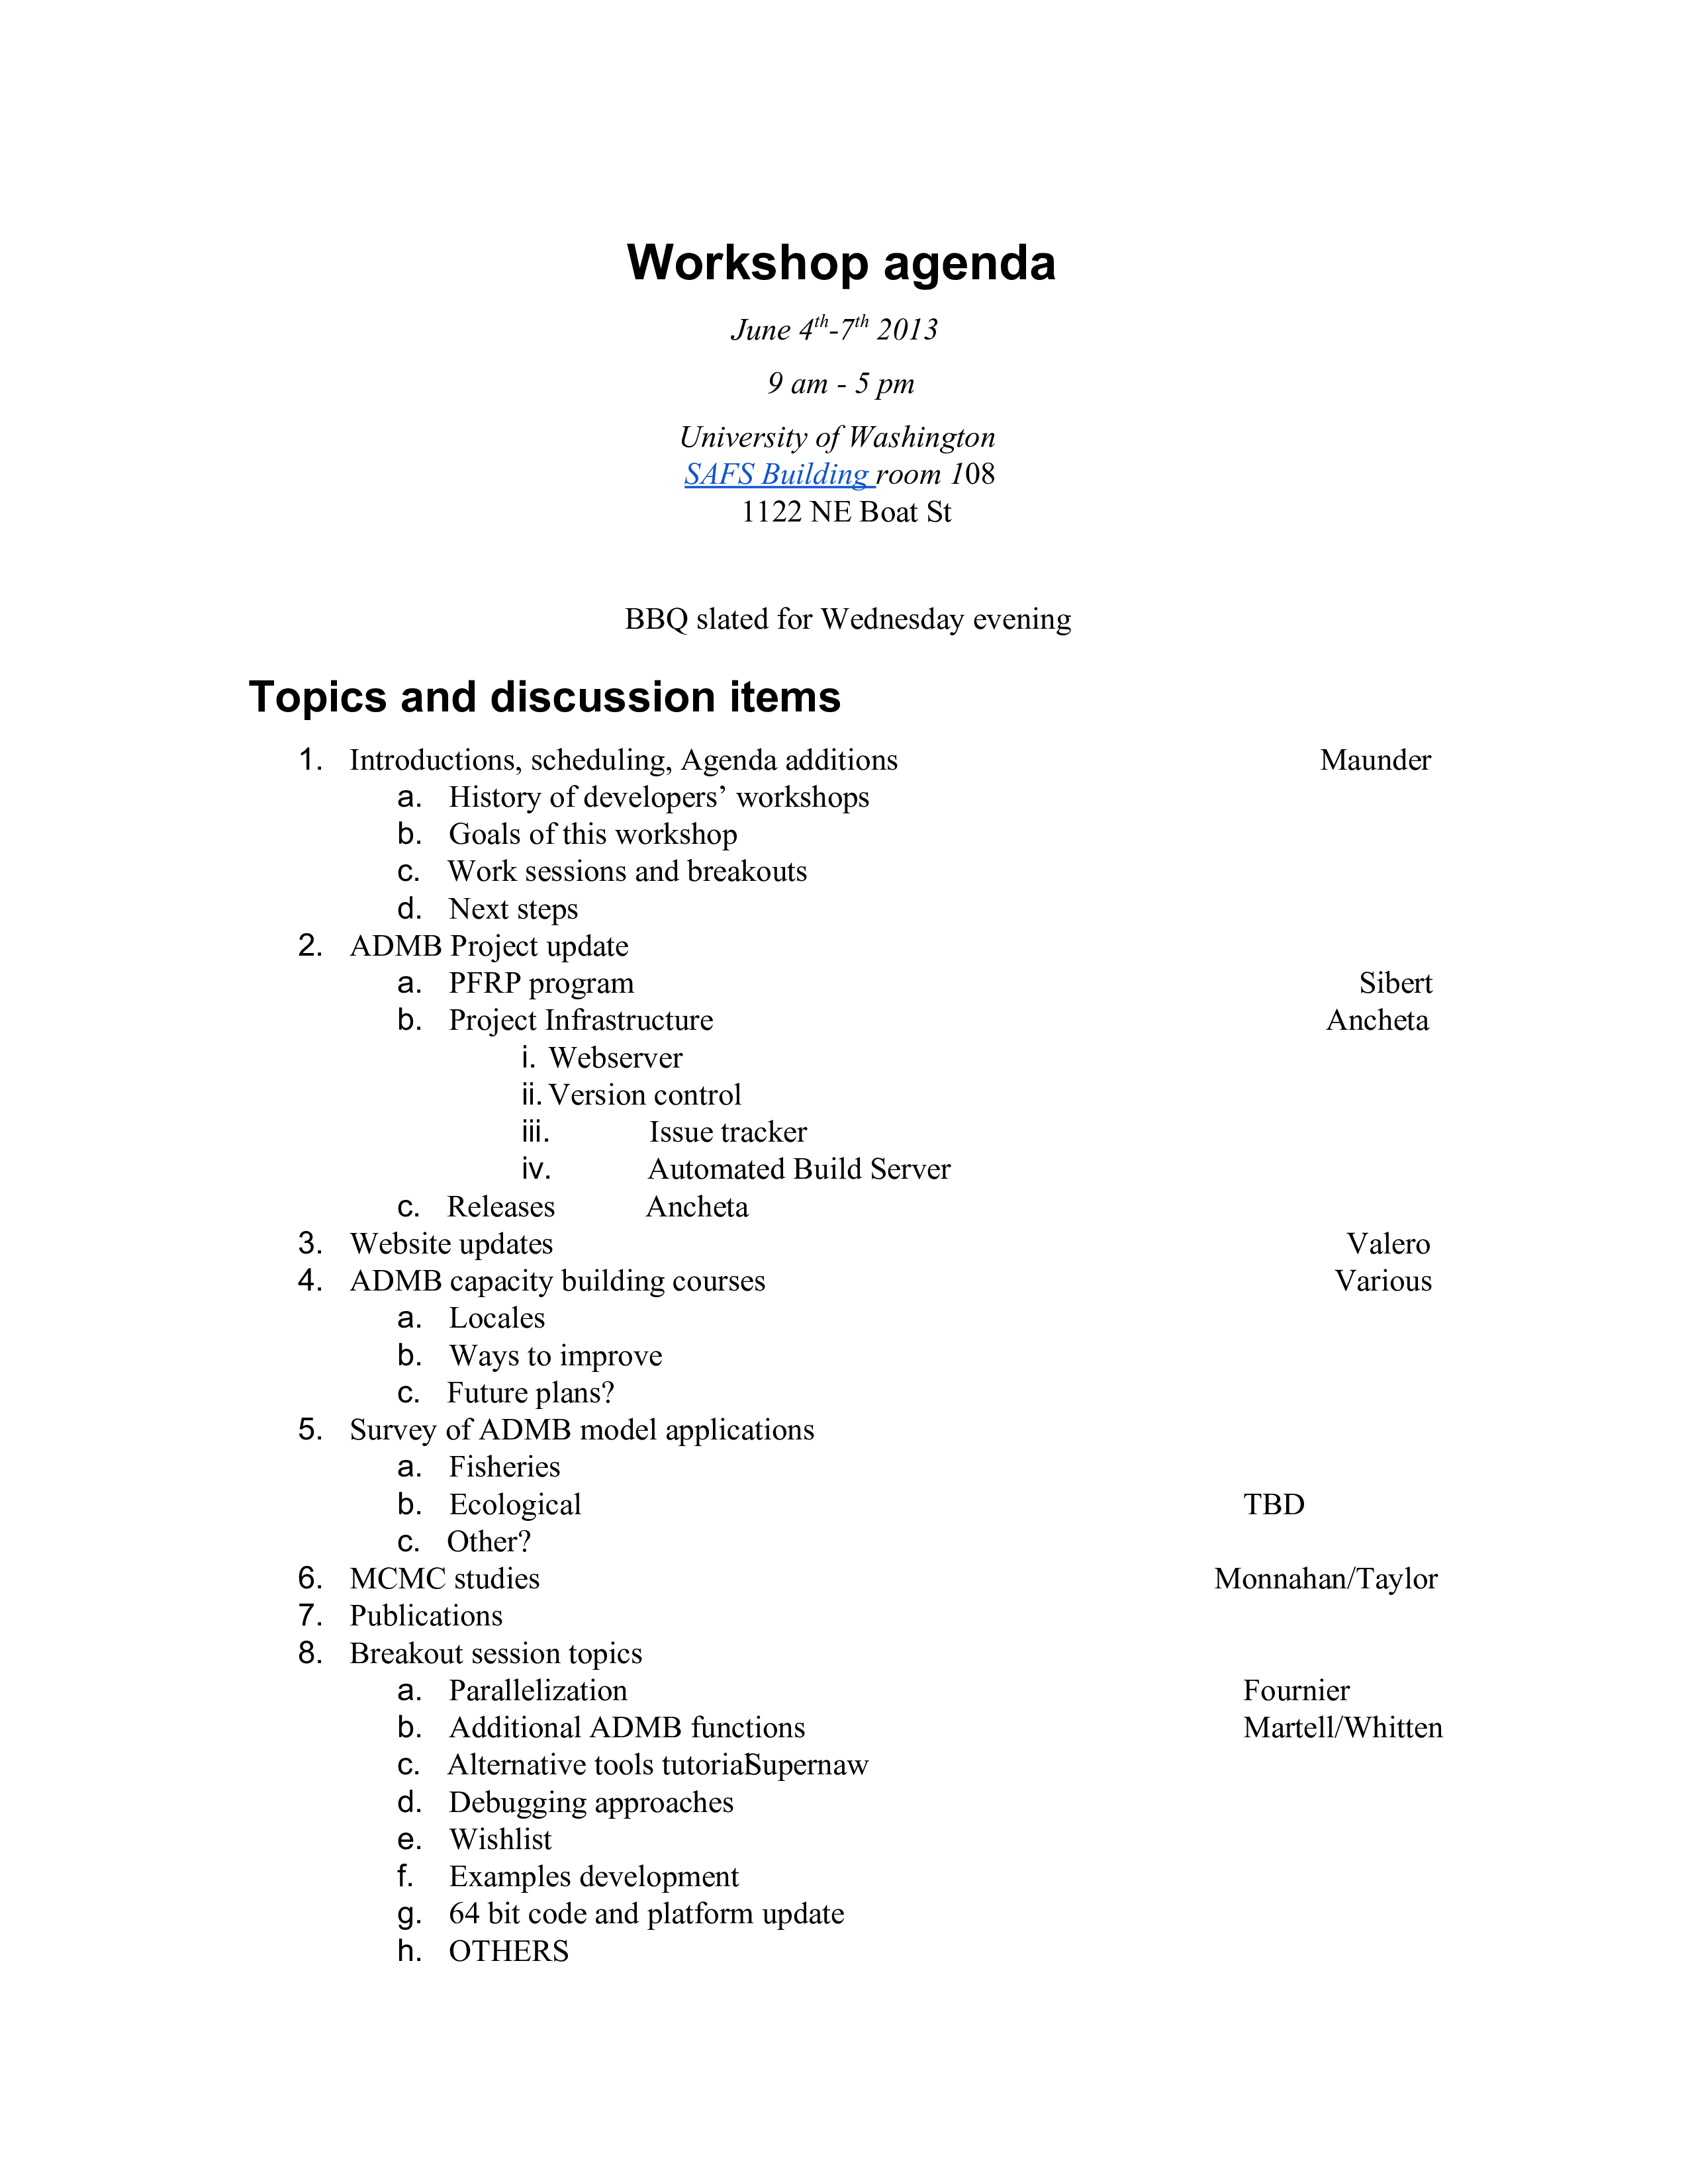 team-buildingworkshop-agenda-templates-at-allbusinesstemplates